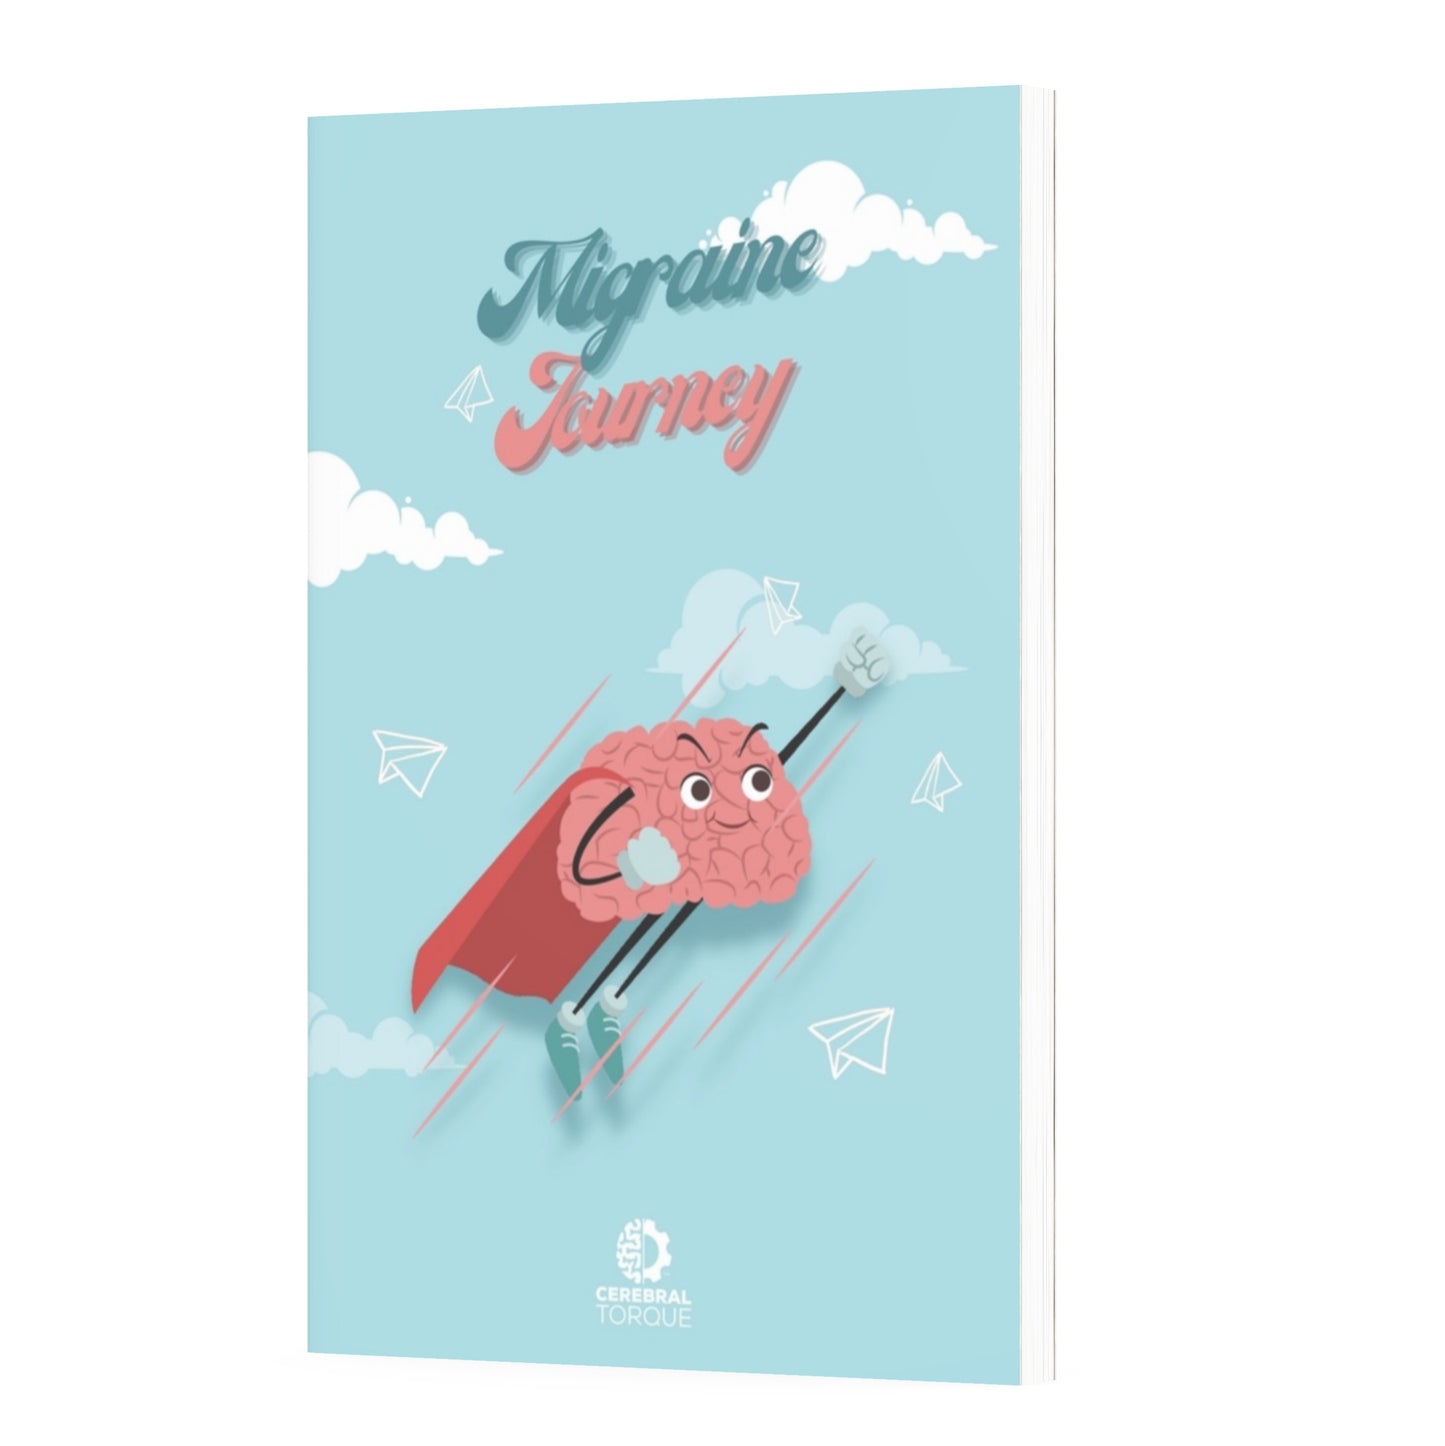 Migraine Journal - Flying Brain